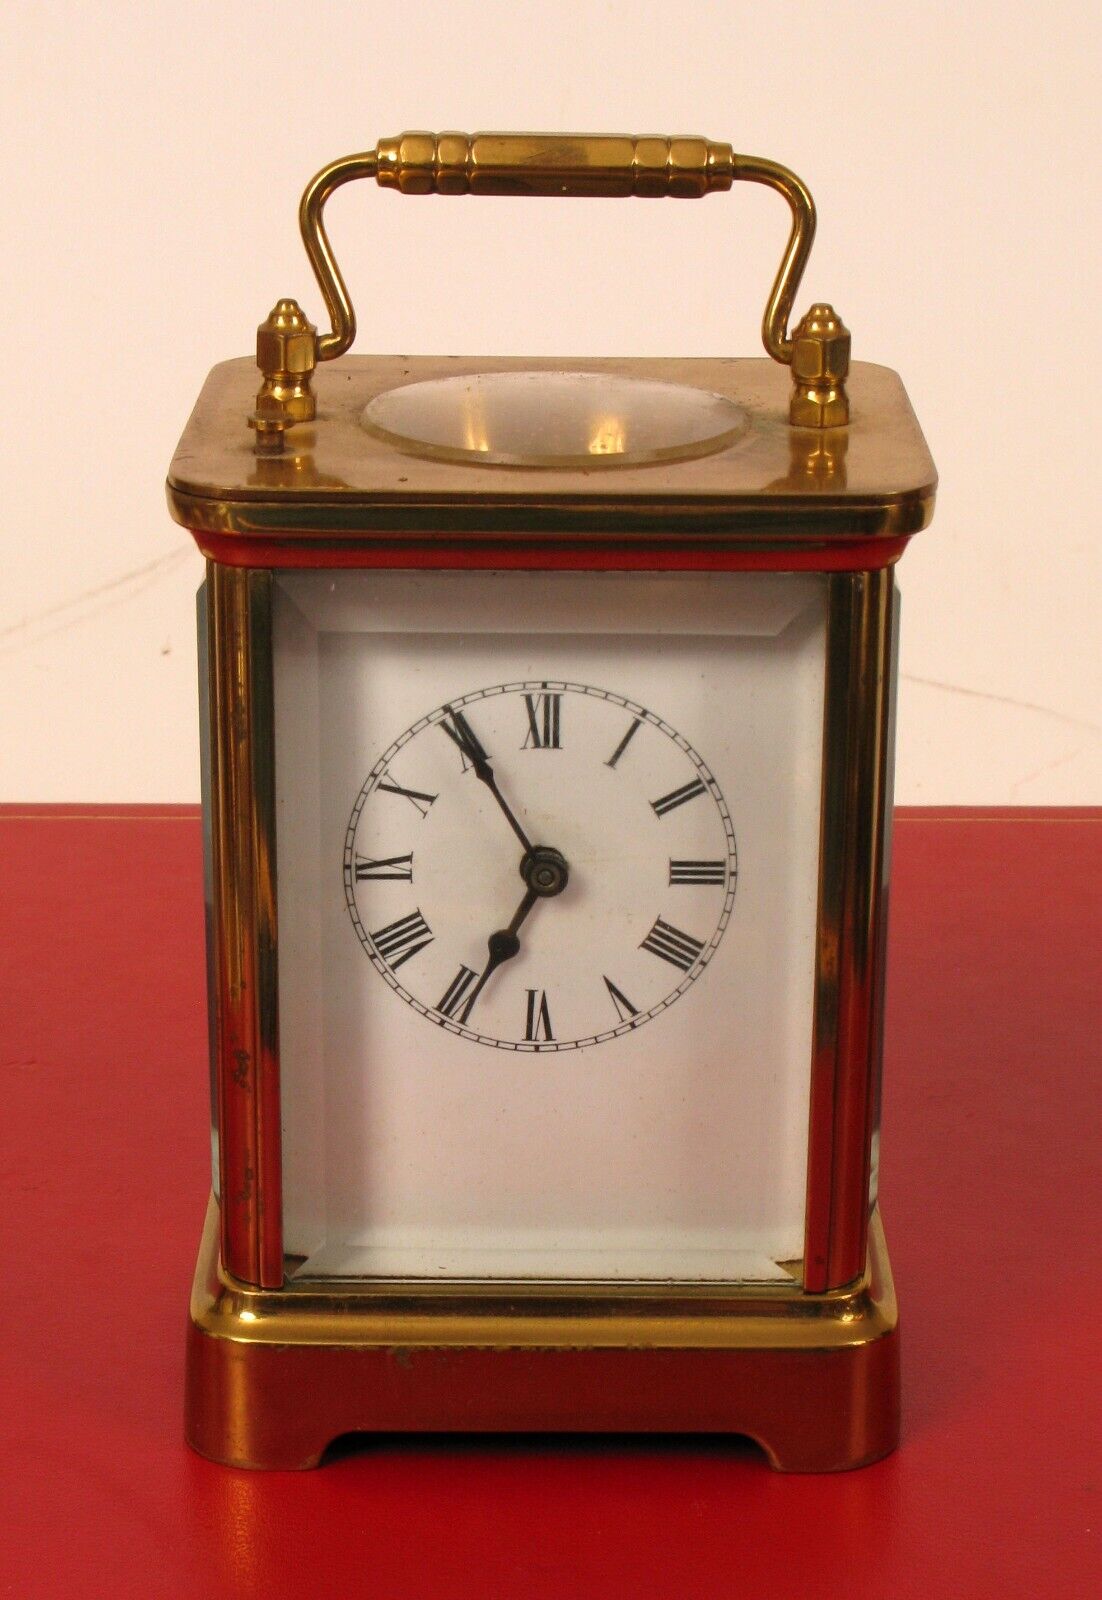 ANTIQUE 1891 WATERBURY CARRIAGE CLOCK - NOT WORKING - FOR REPAIR 